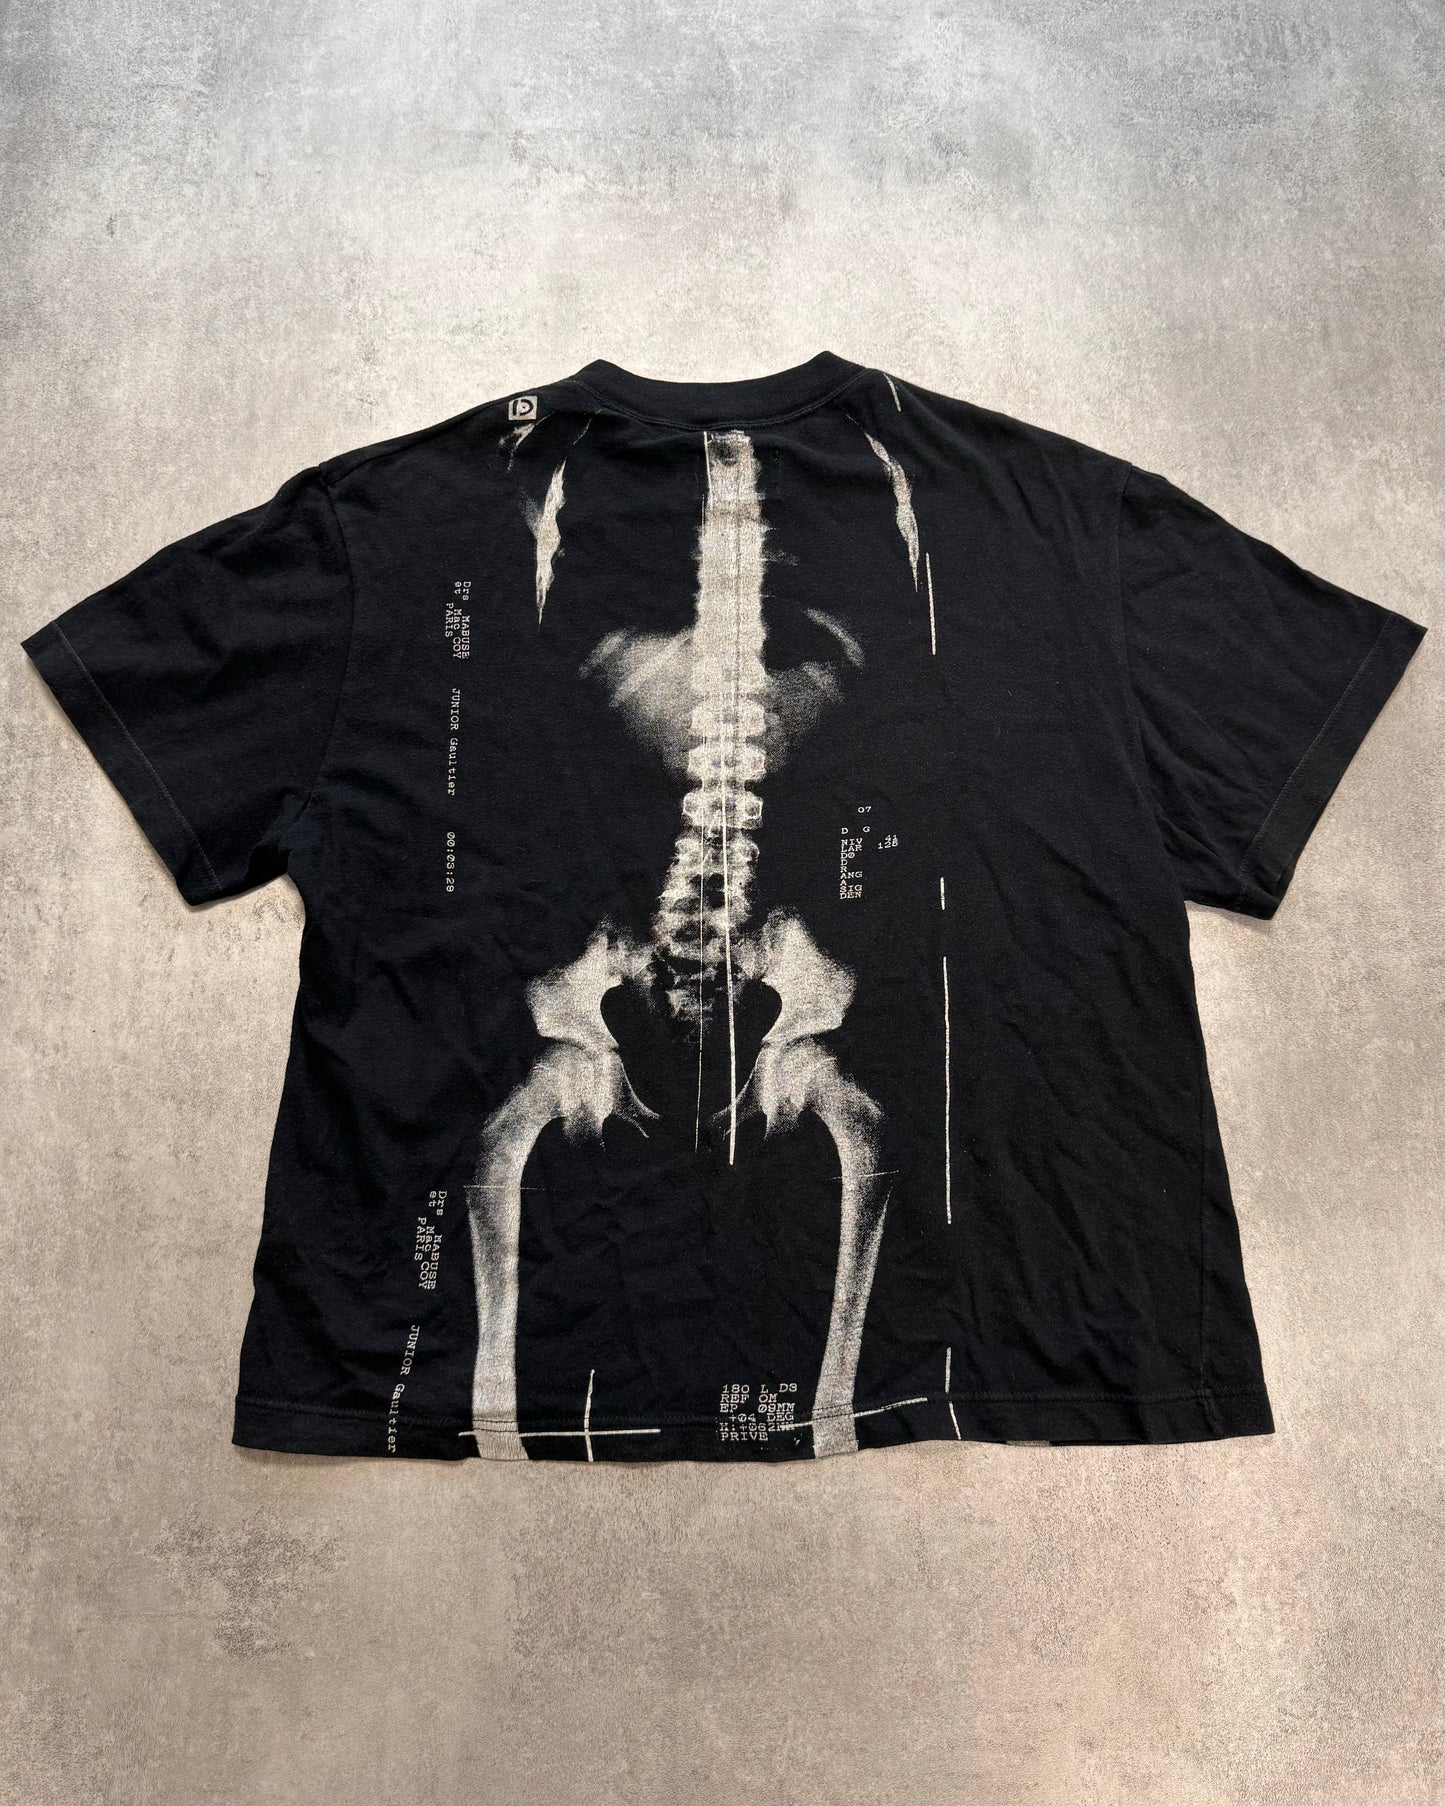 SS1990 Jean Paul Gaultier Skeleton X-Ray Tee (S/M)